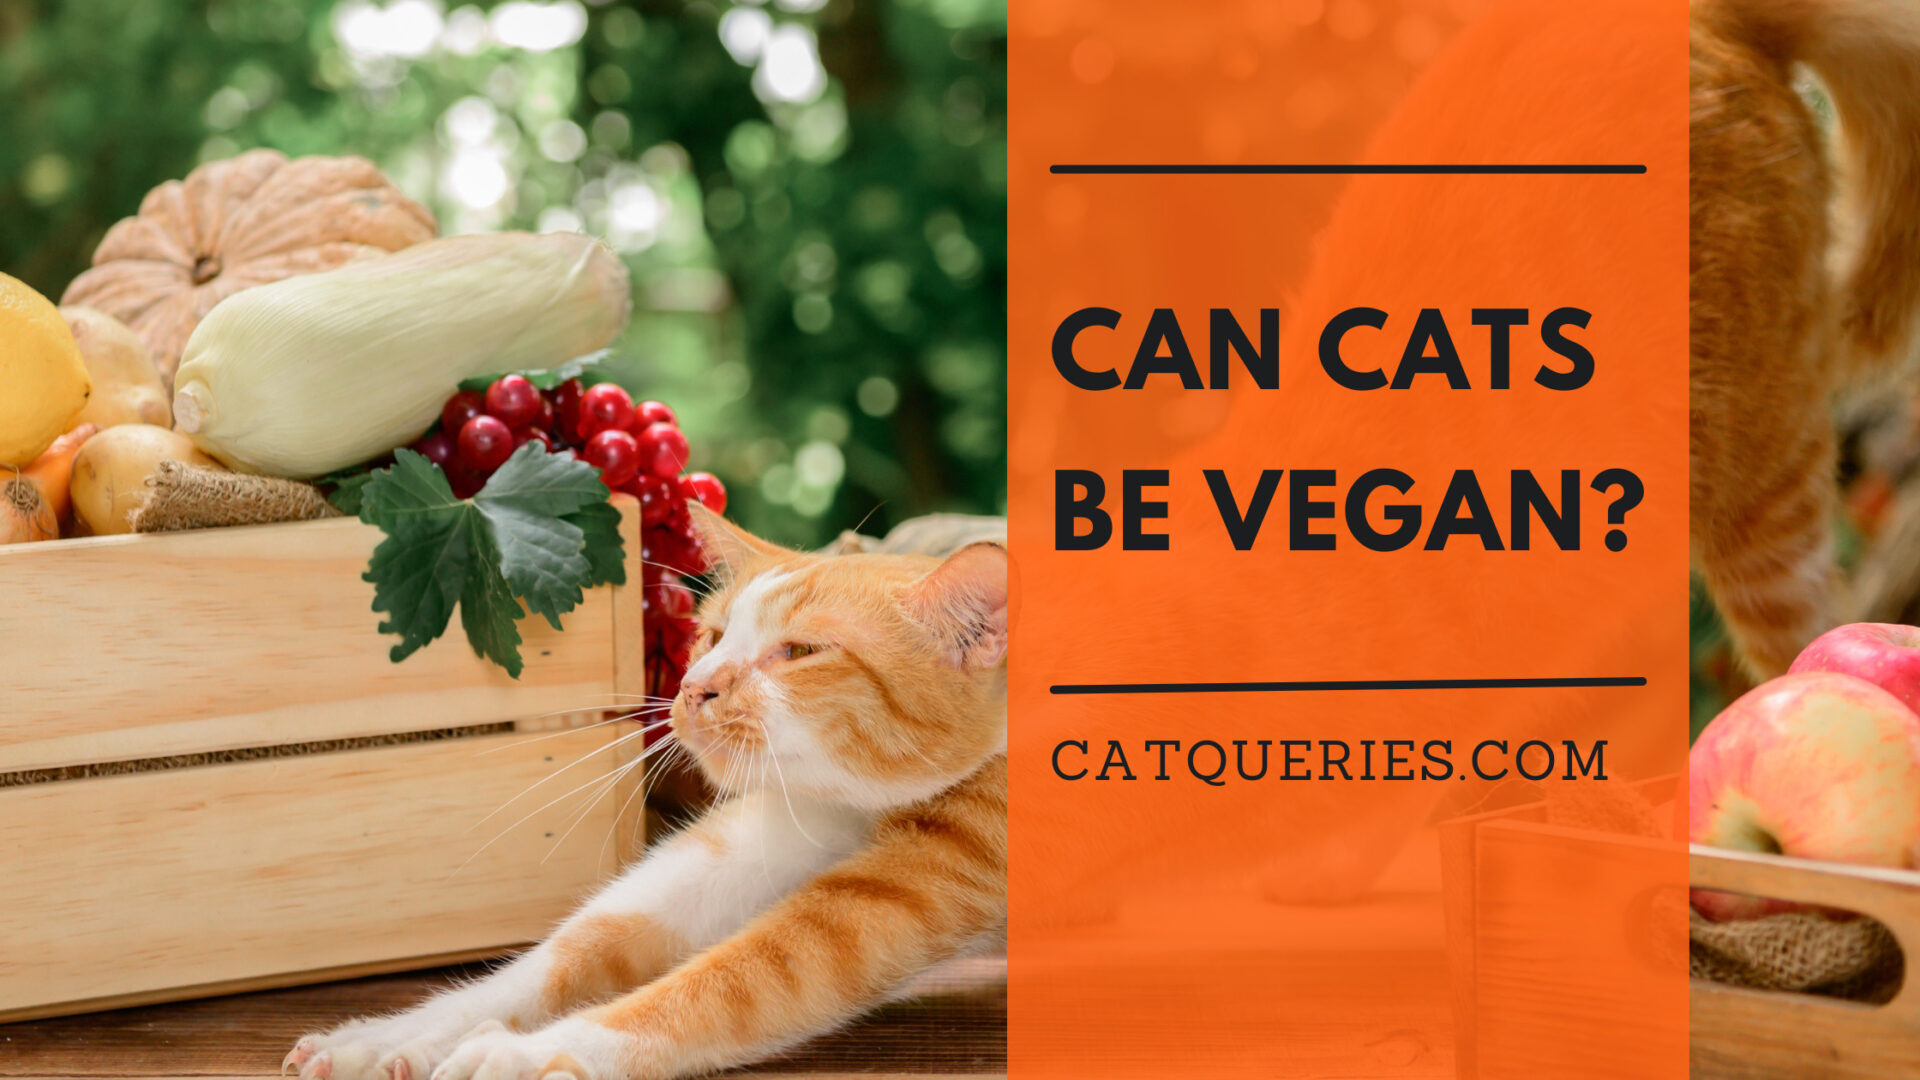 Can cats be vegan?